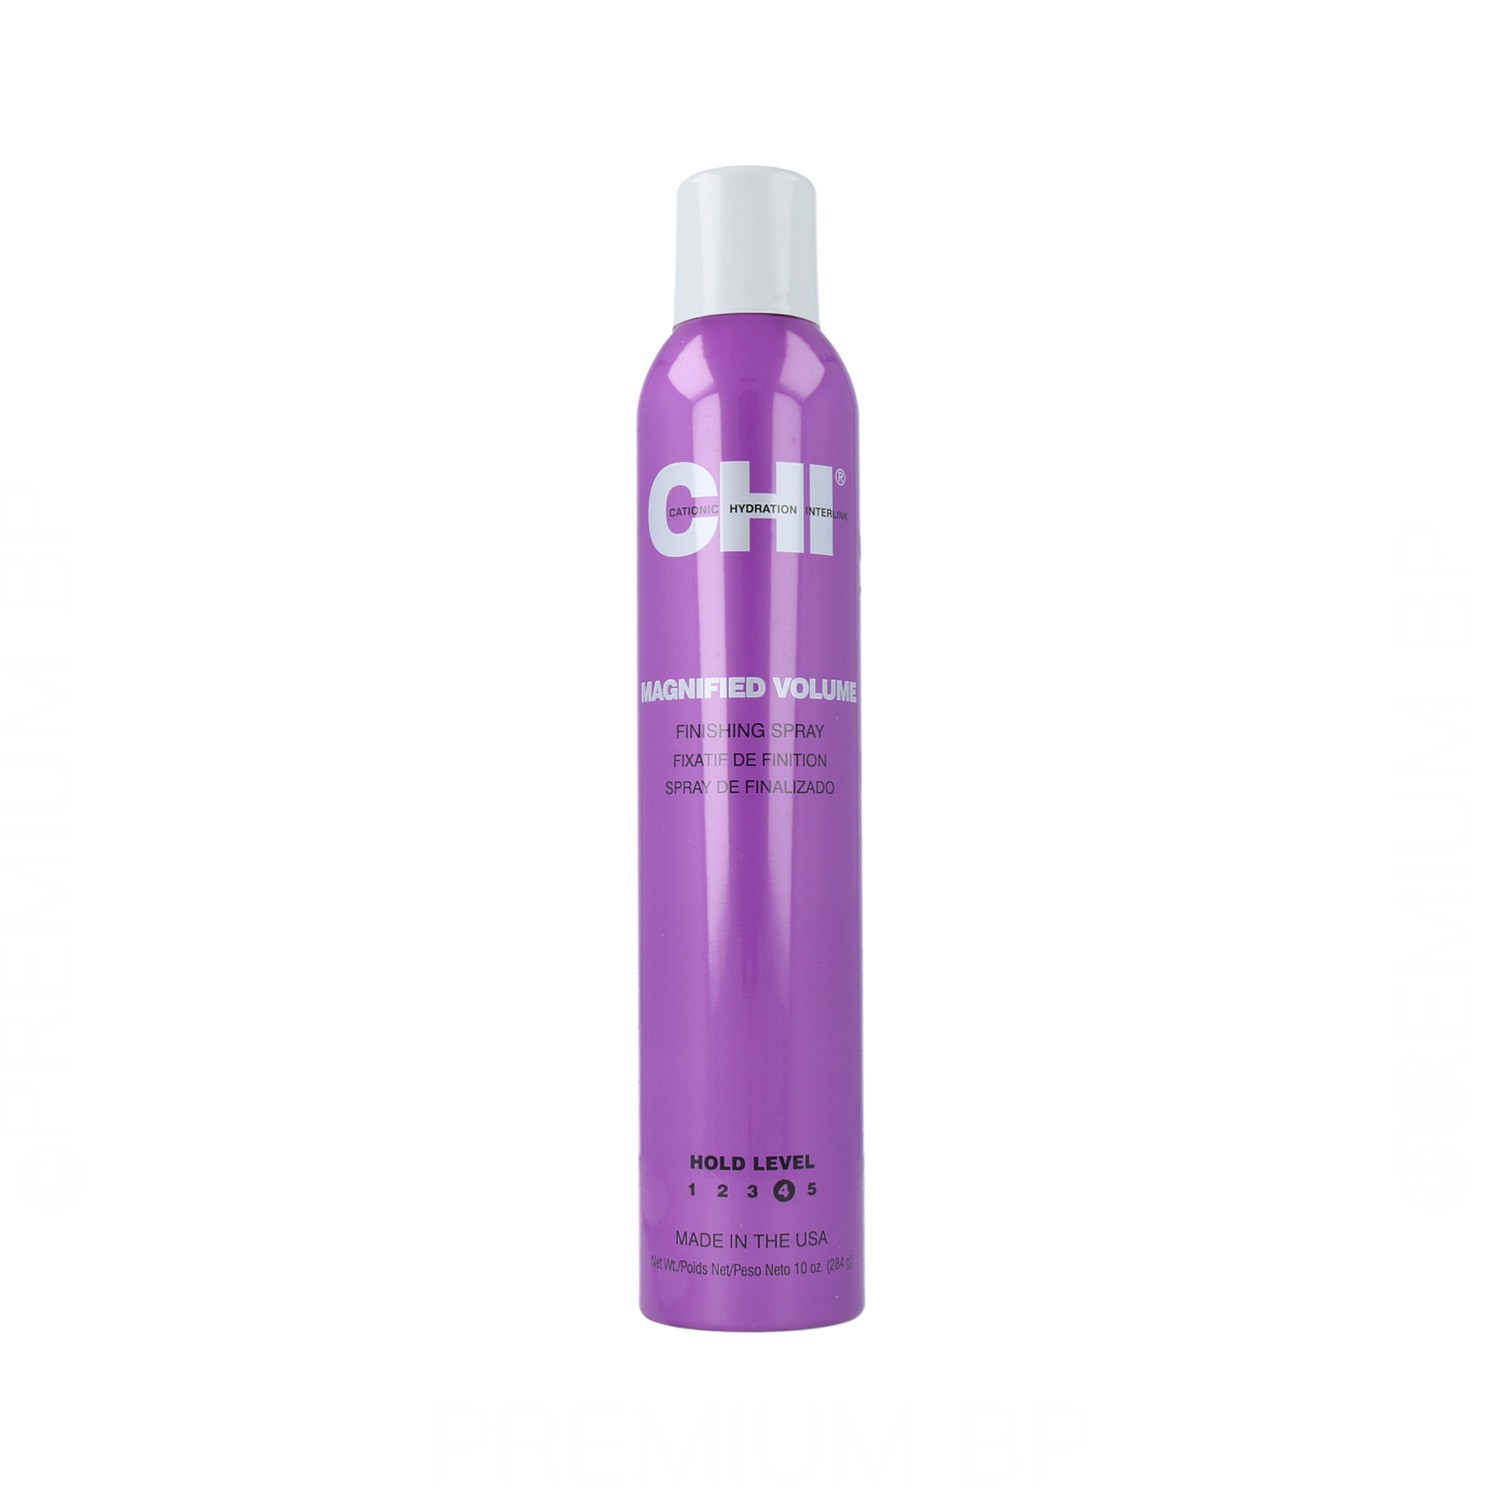 CHI Magnified Volume Finishing Spray - fixační sprej na vlasy, 284 g